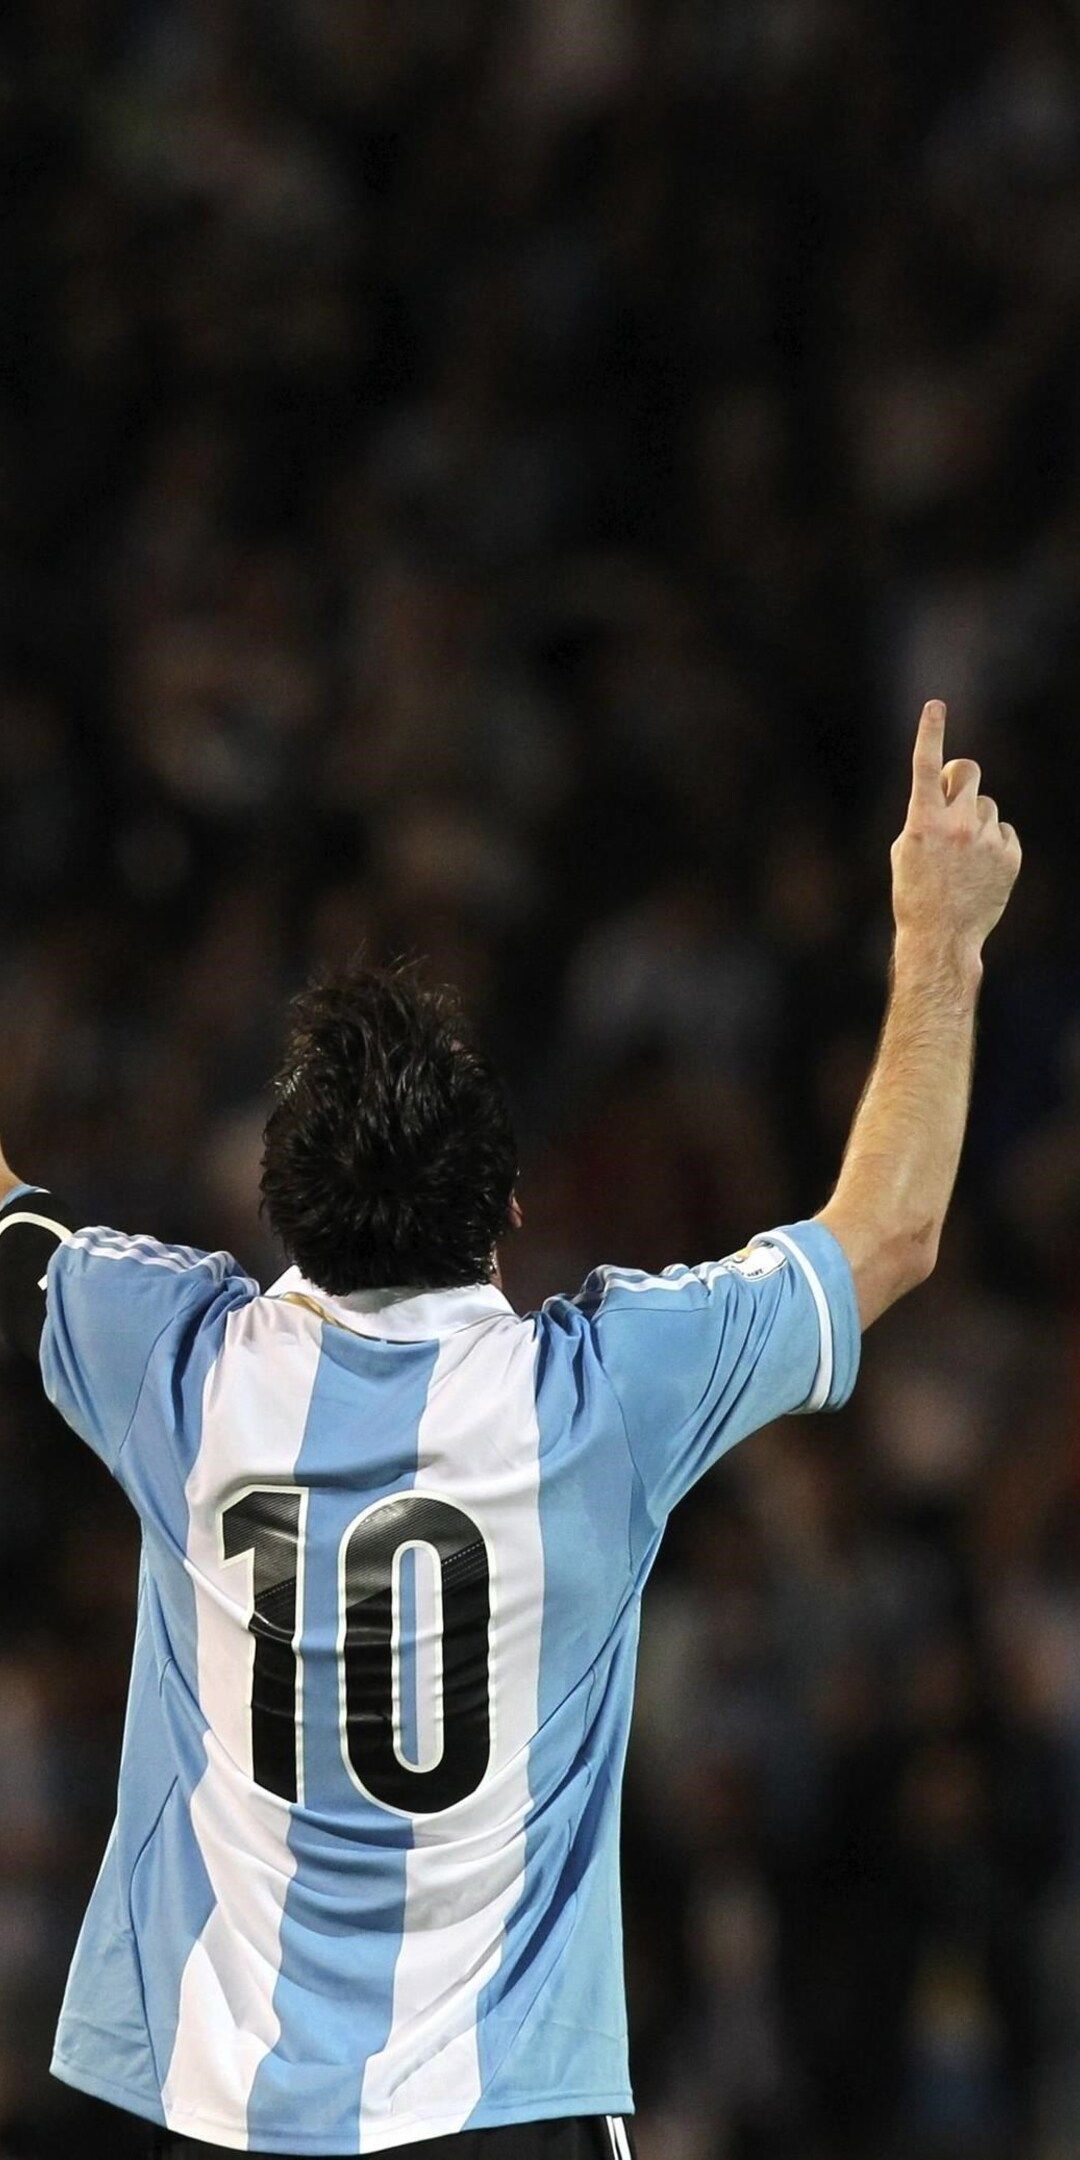  Leo Messi Hintergrundbild 1080x2160. Leo Messi Argentina One Plus 5T, Honor 7x, Honor view Lg Q6 , HD 4k Wallpaper, Image, Background, Photos and Picture